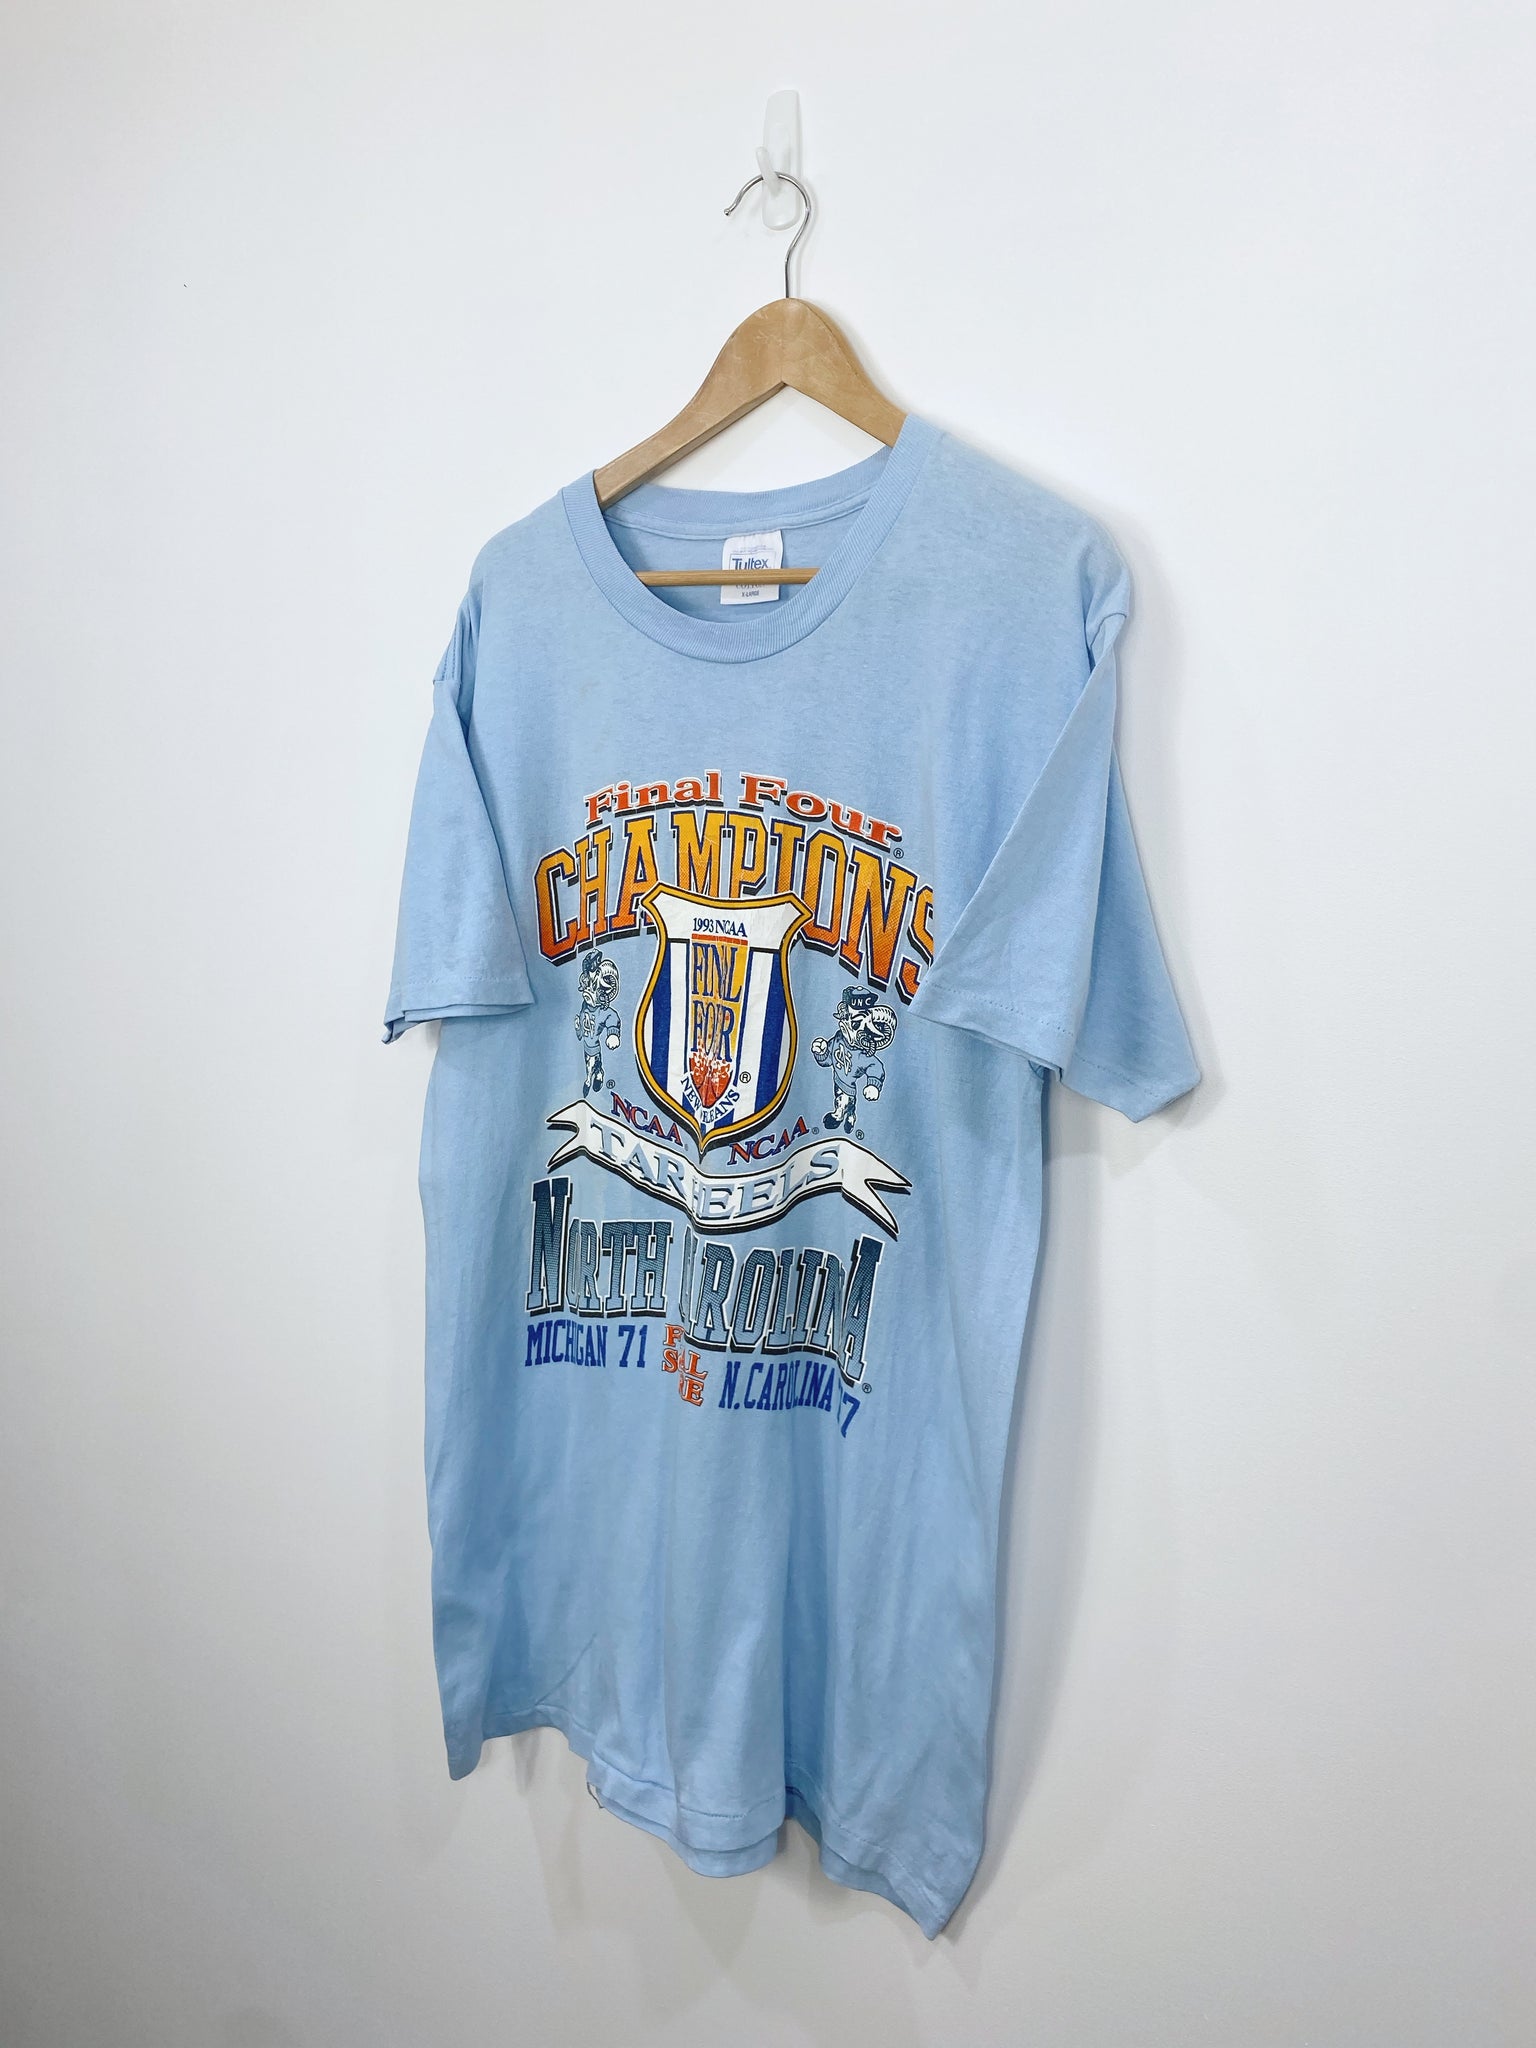 Vintage 1993 North Carolina Tarheels Championship T-shirt L